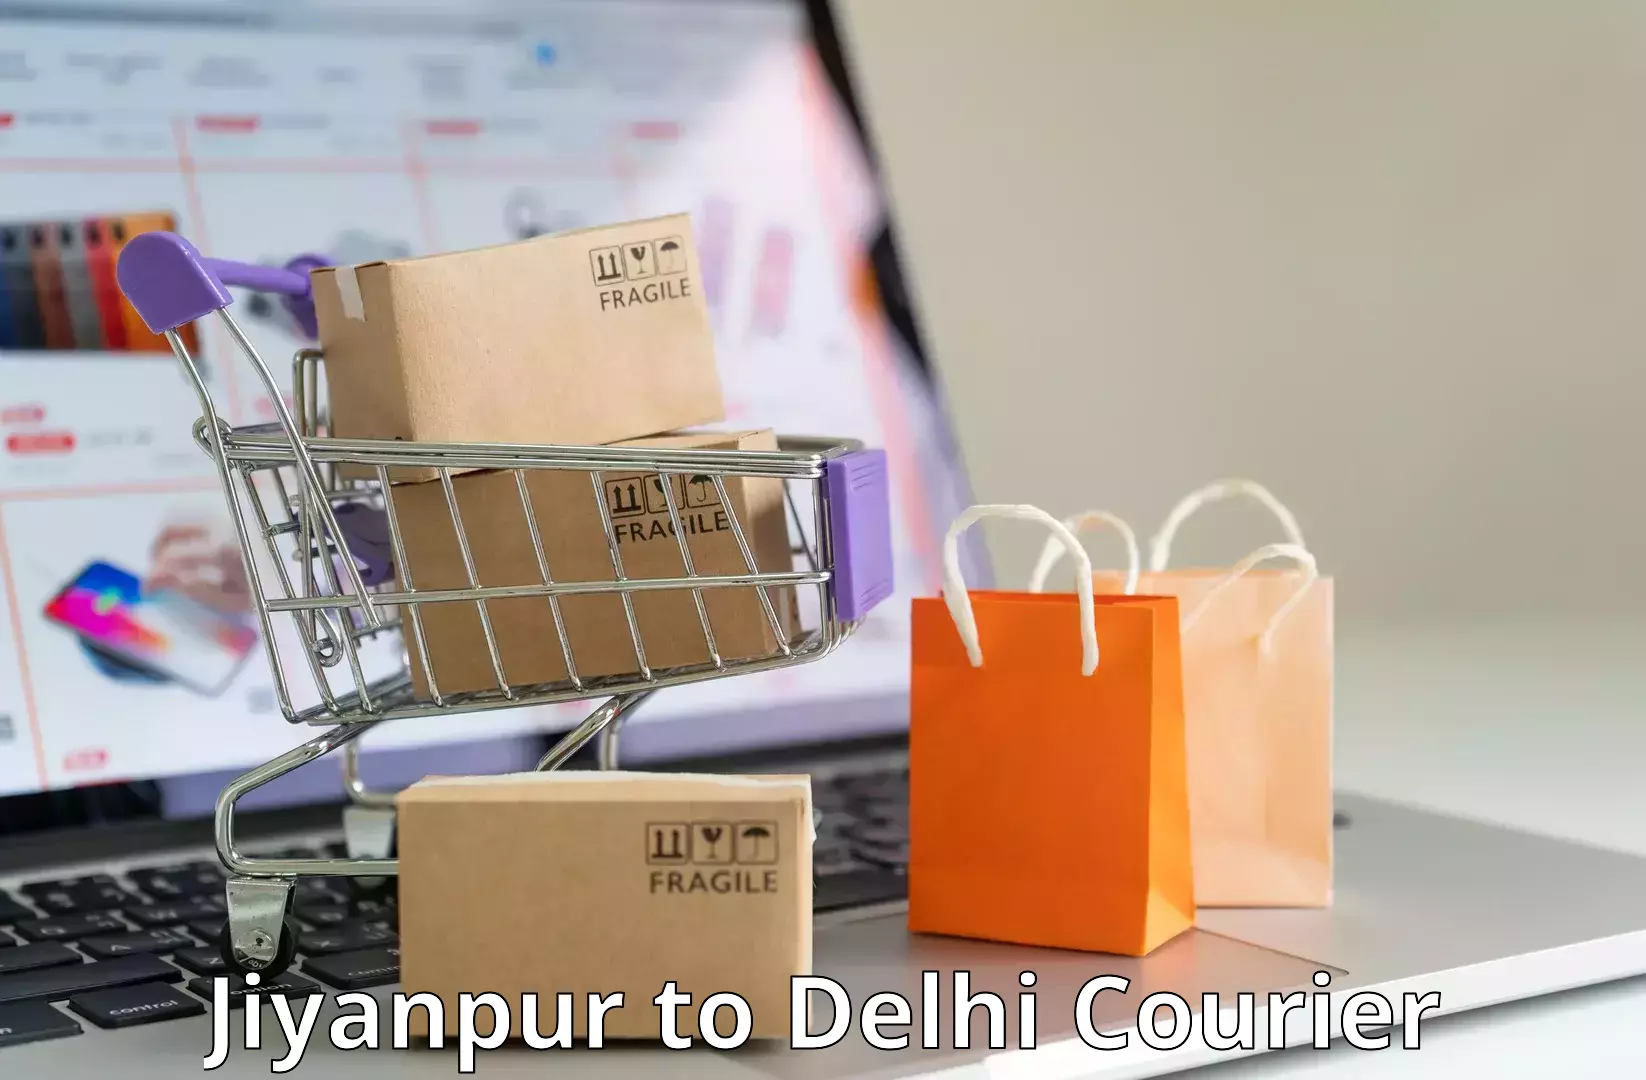 Efficient order fulfillment Jiyanpur to Delhi